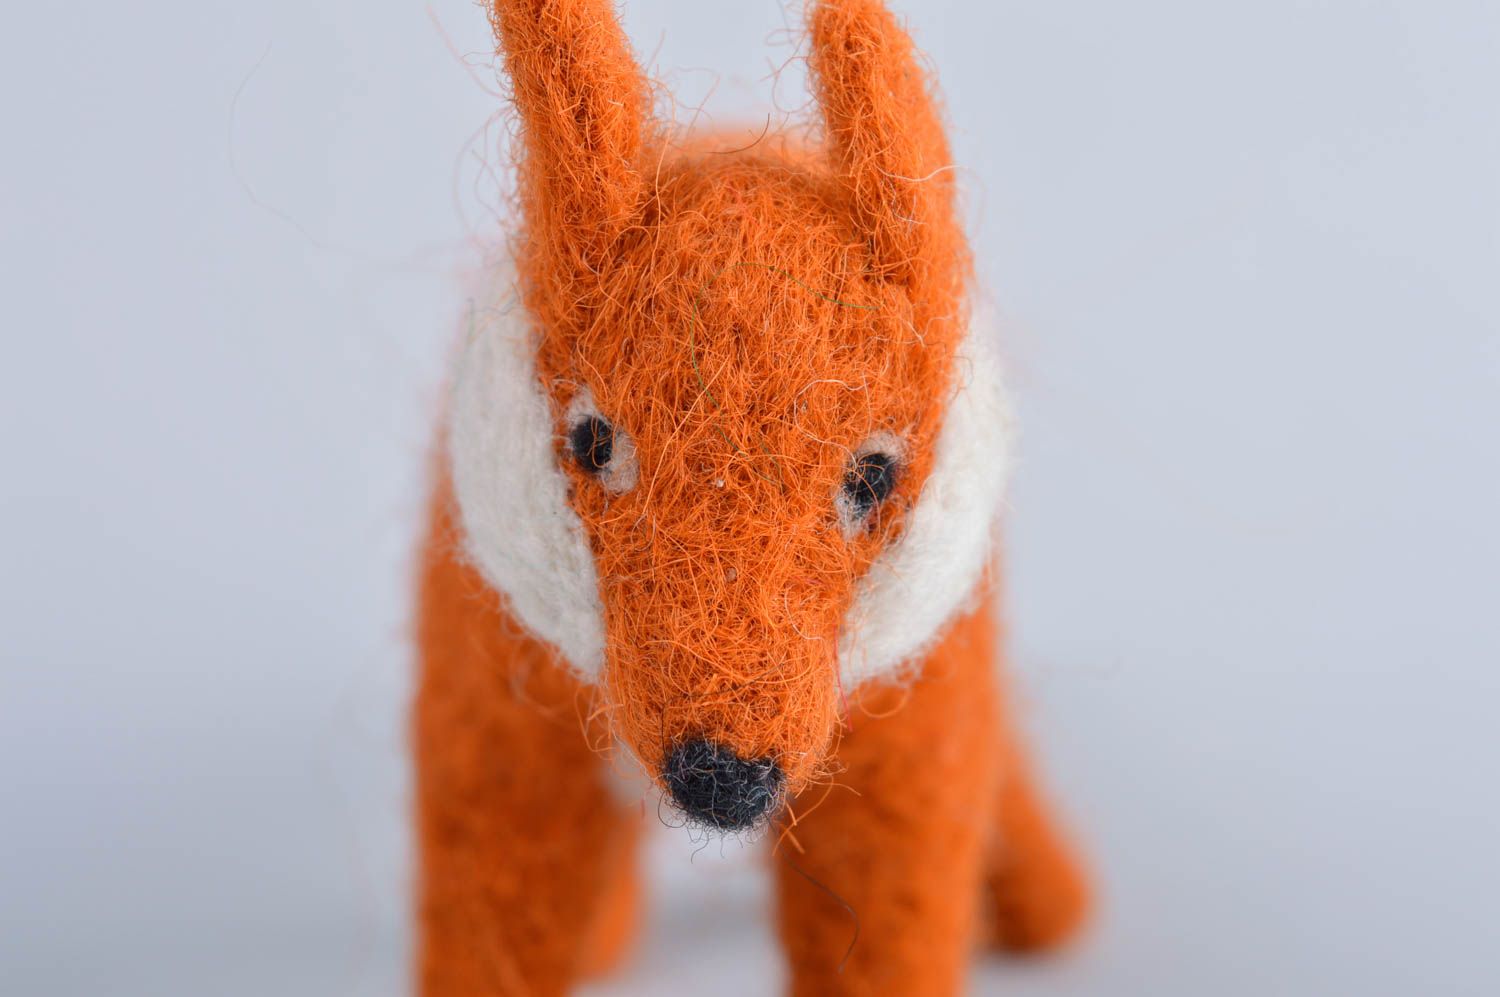 Handmade toy unusual toy for children decor ideas woolen animal toy gift ideas photo 4